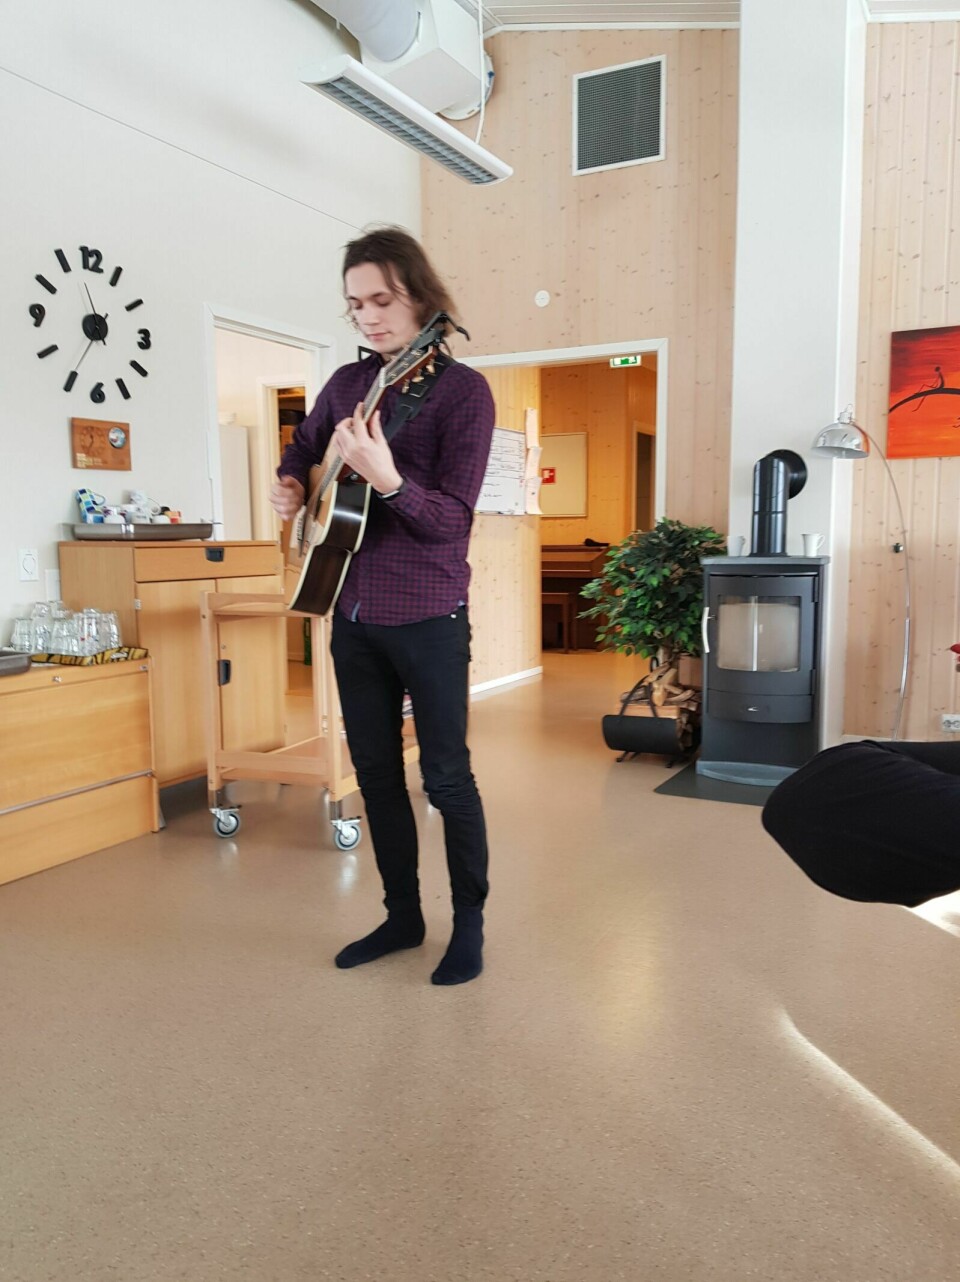 UNDERHOLDT: Eskil Løkstad Hansen er musikklærer på kulturskolen i Målselv, og sto for det musikalske innslaget under arrangementet. Foto: Privat